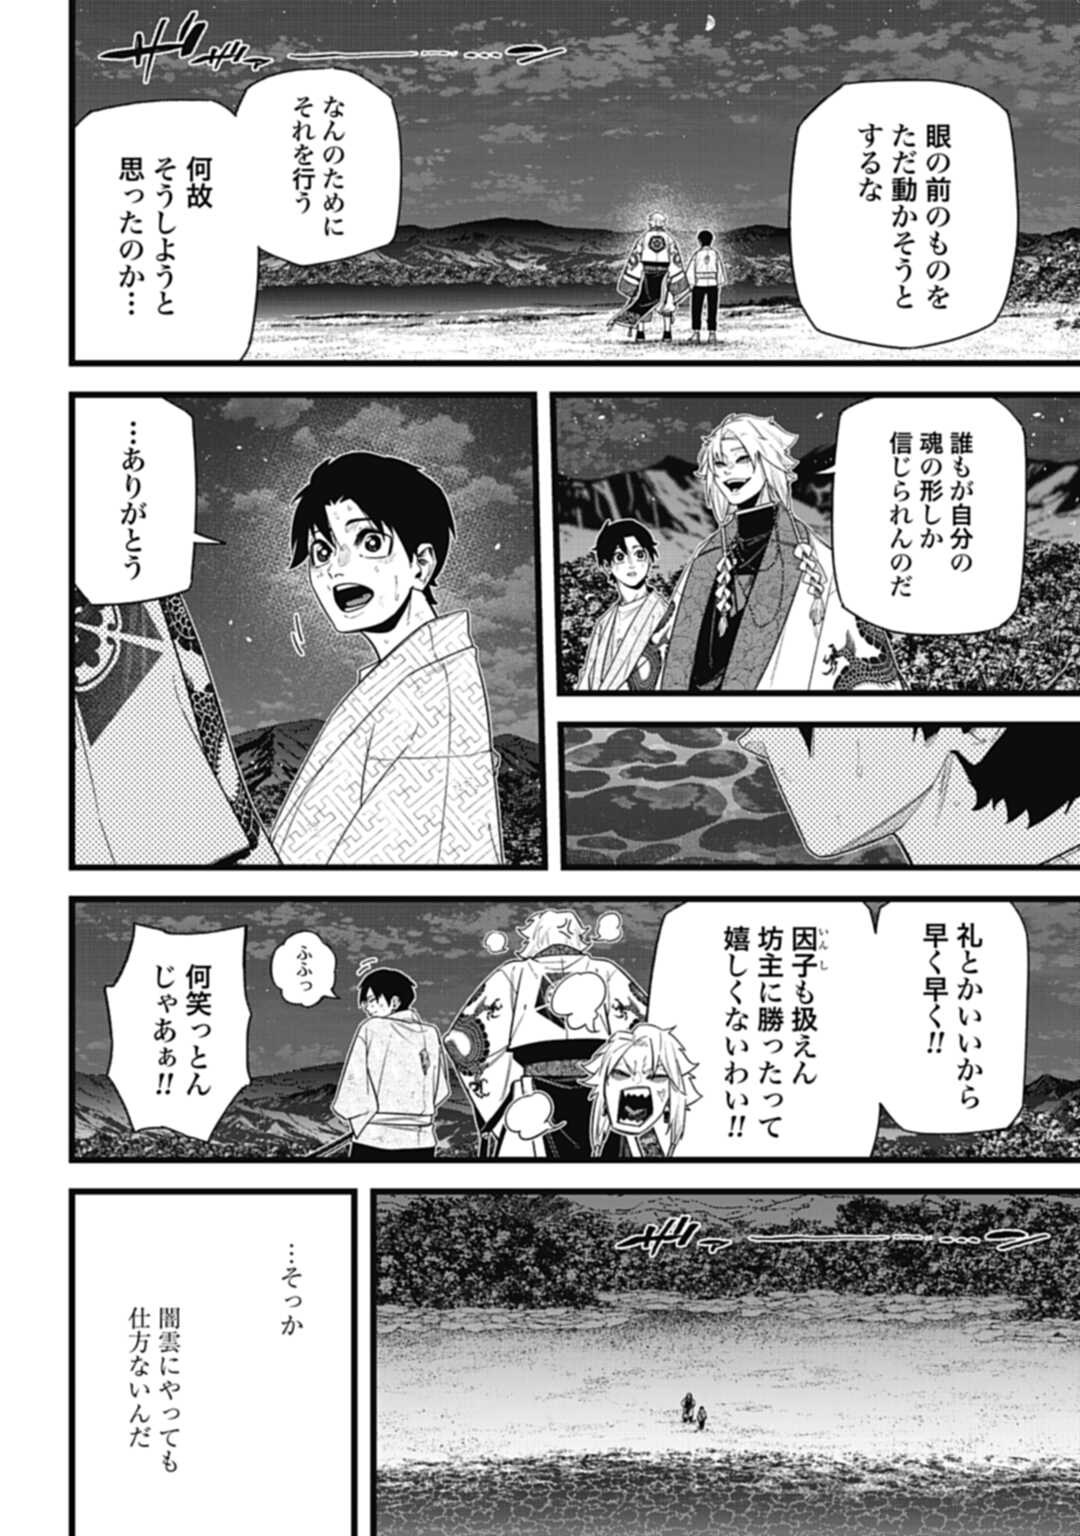 Nobunaga Multiverse - Chapter 10.3 - Page 4